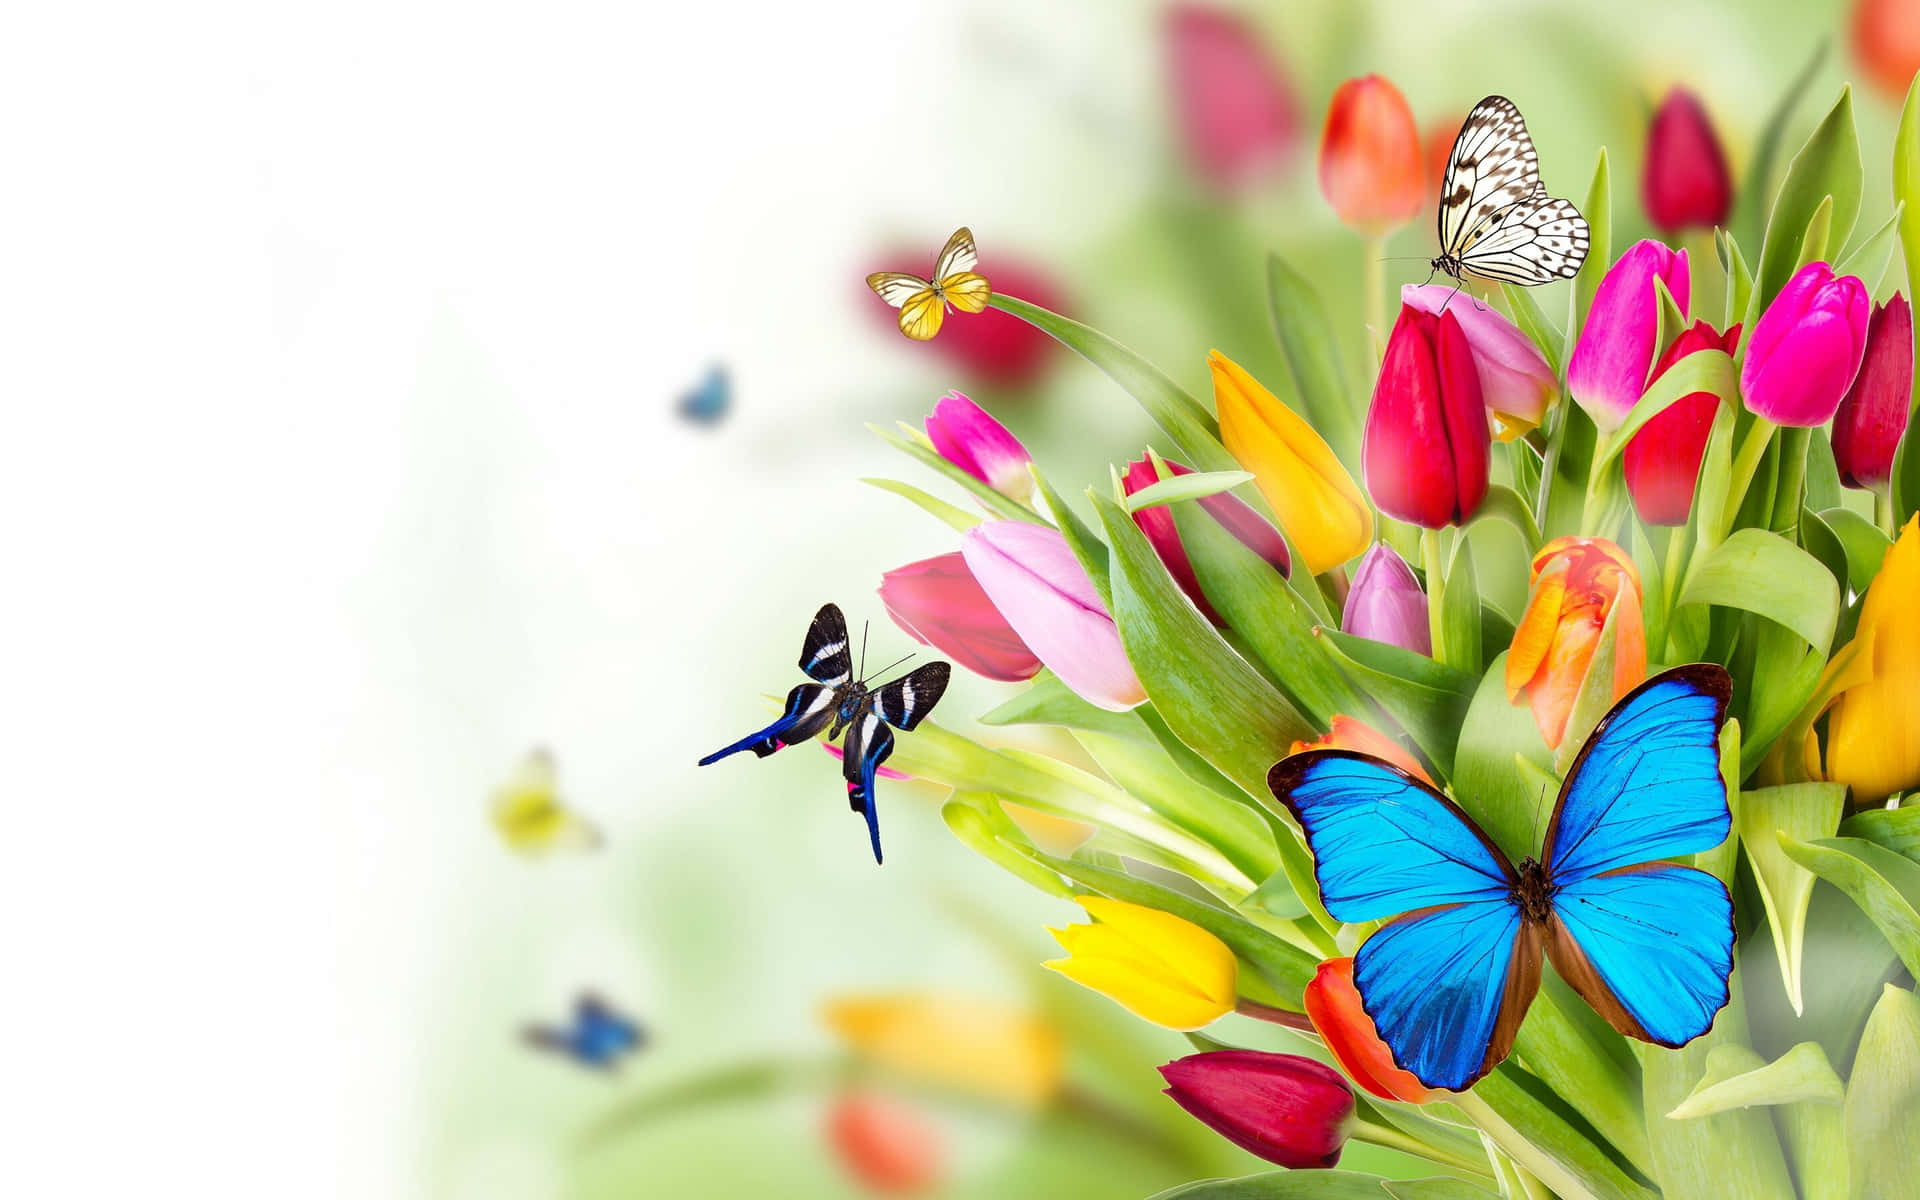 Enjoy the vibrant colors of Butterflies in this Garden Wallpaper